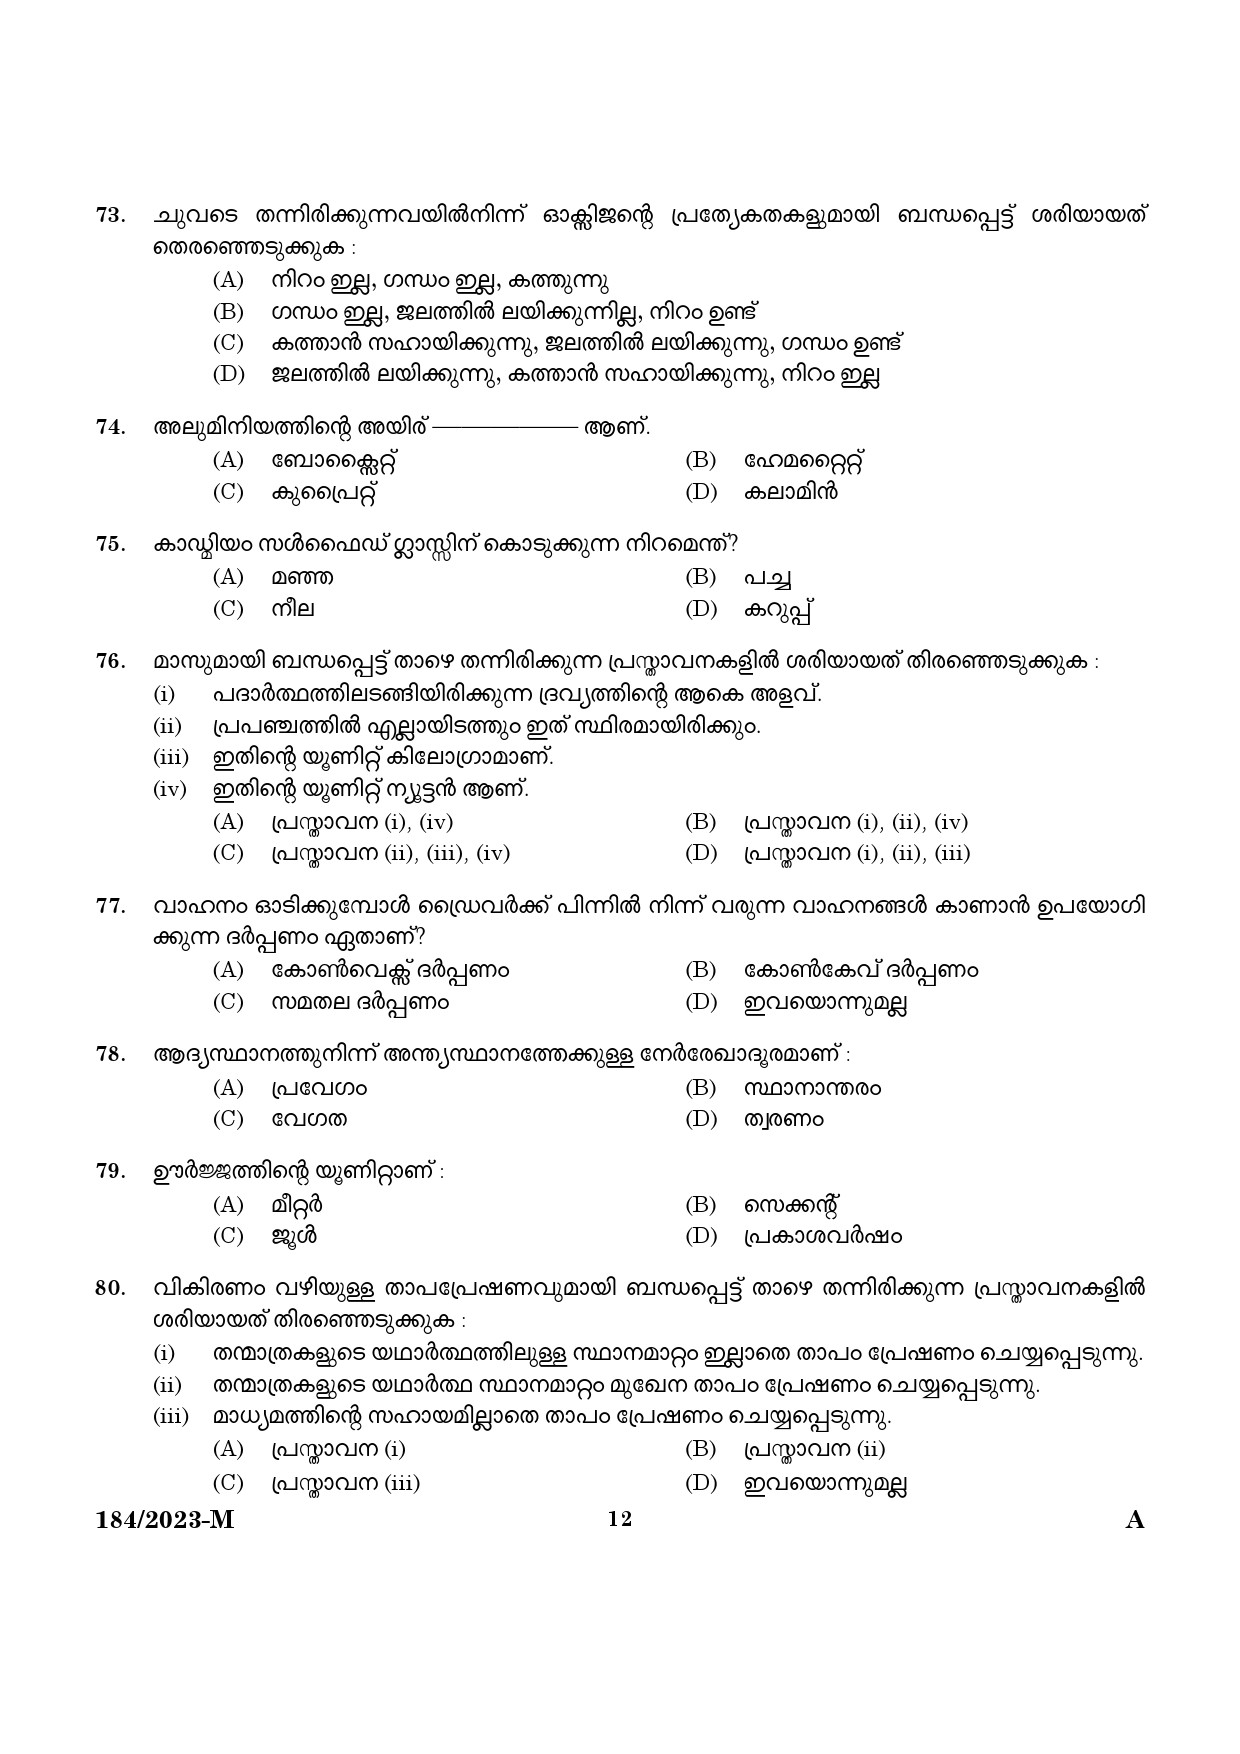 KPSC LGS Malayalam Exam 2023 Code 1842023 M 10